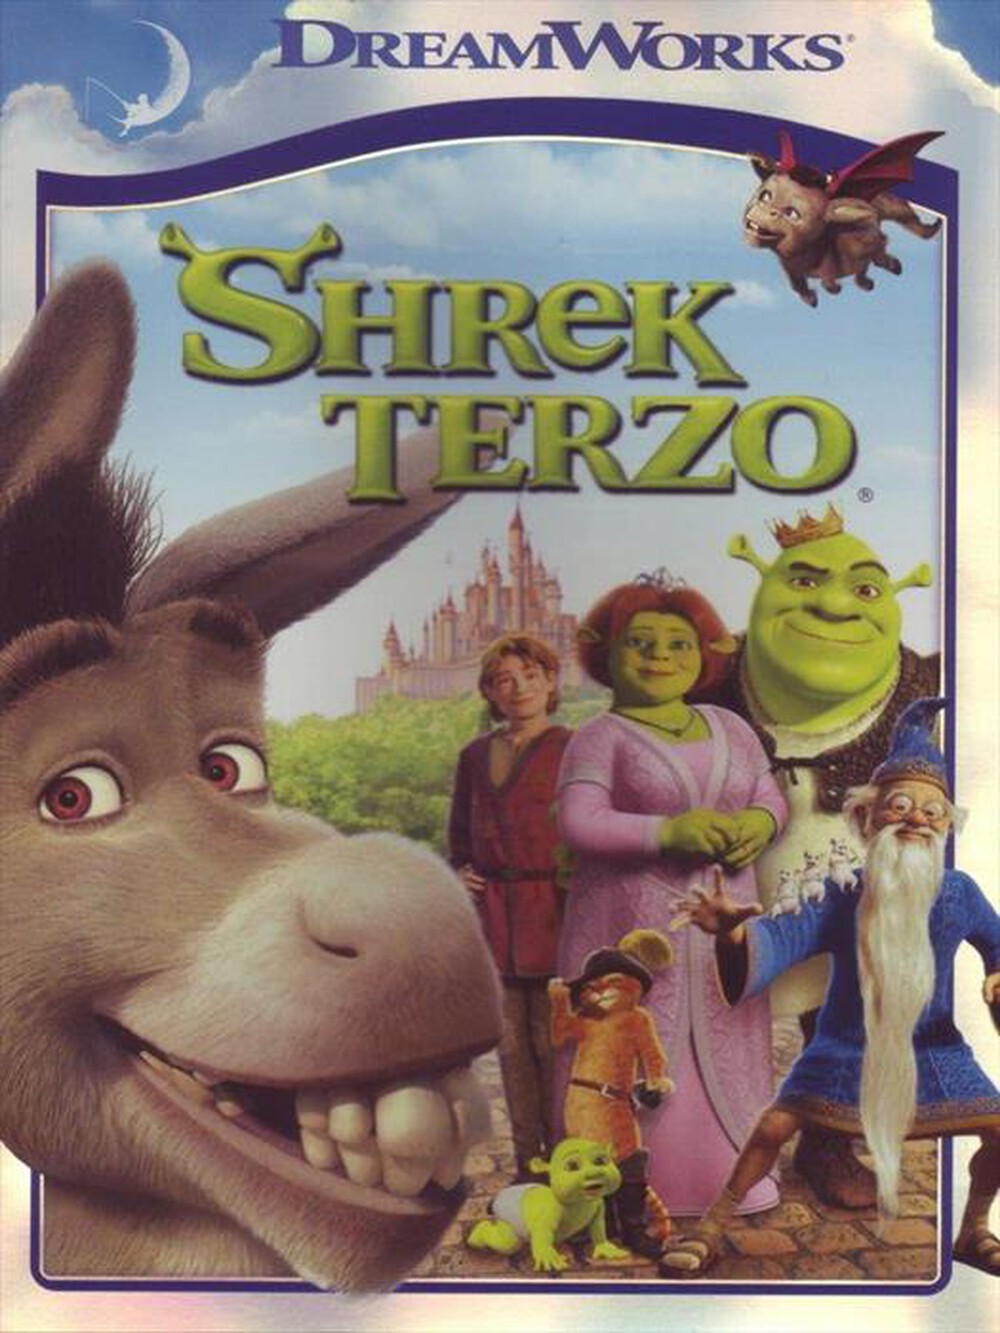 "WALT DISNEY - Shrek Terzo"